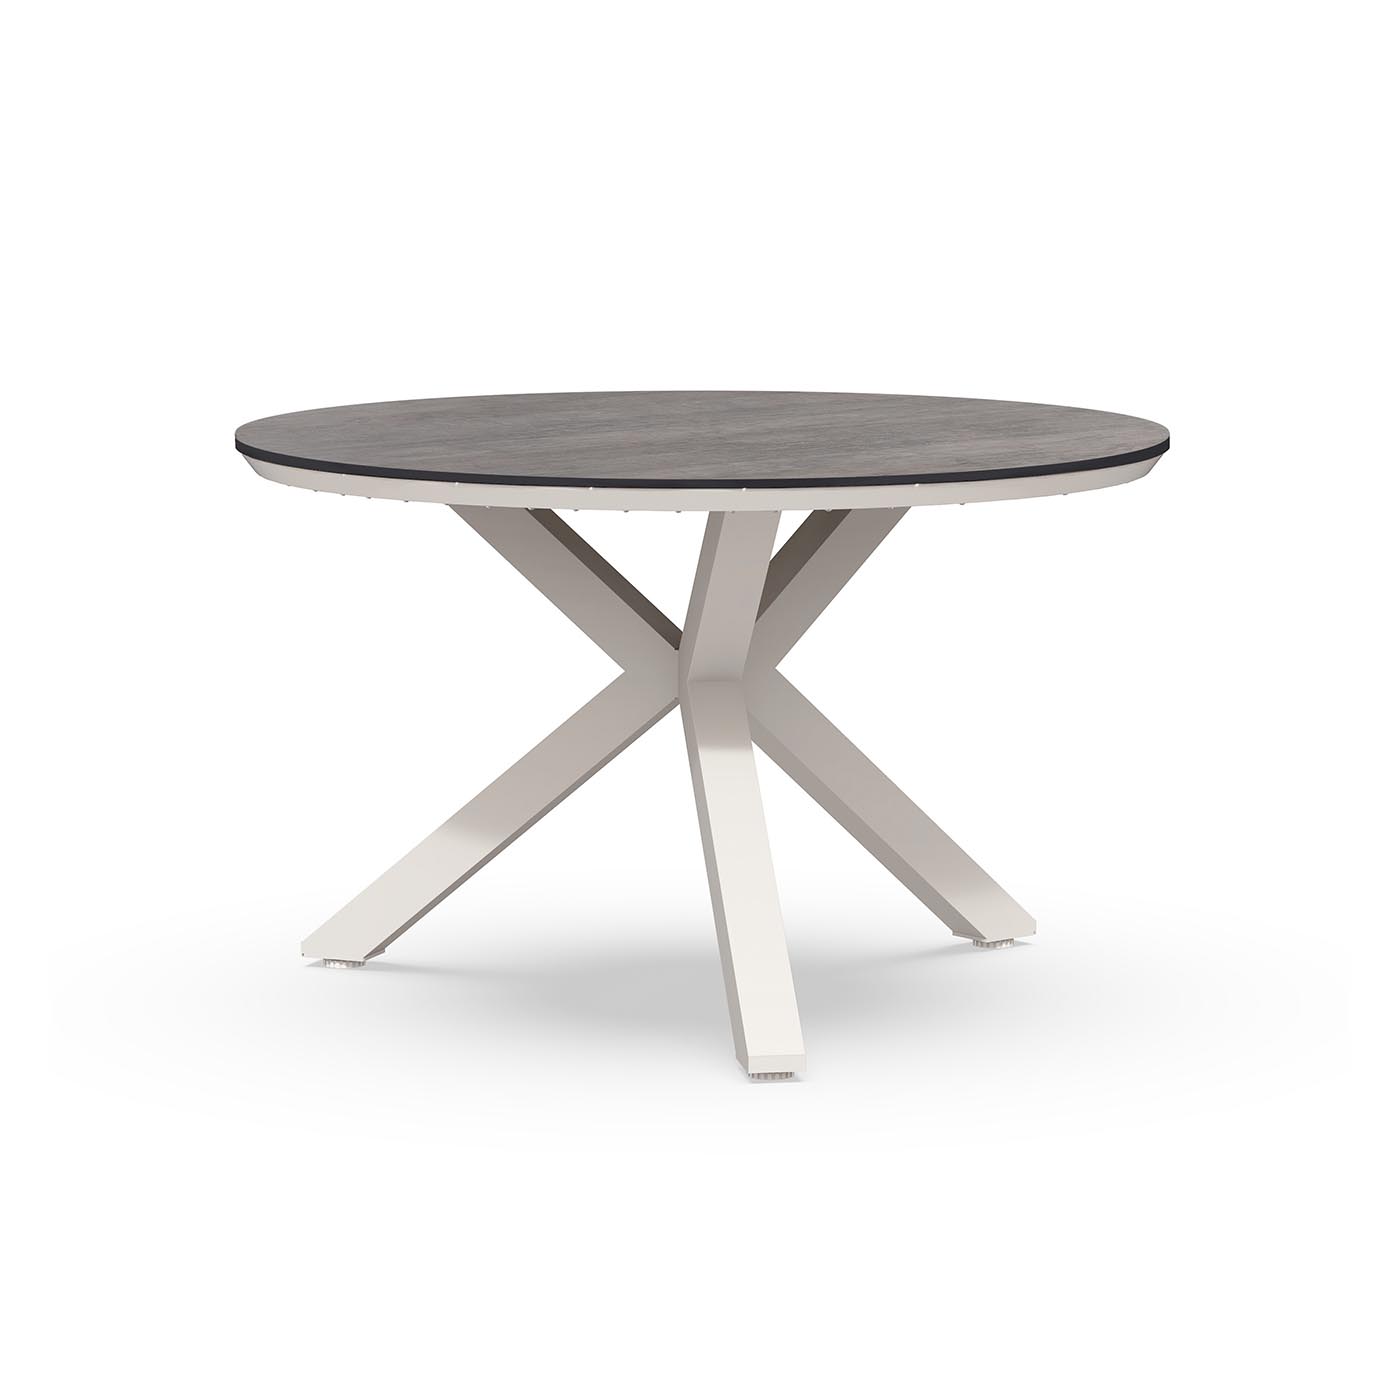 Orbital Dining Table Trespa Forest Grey 120 cm Ø Creme White